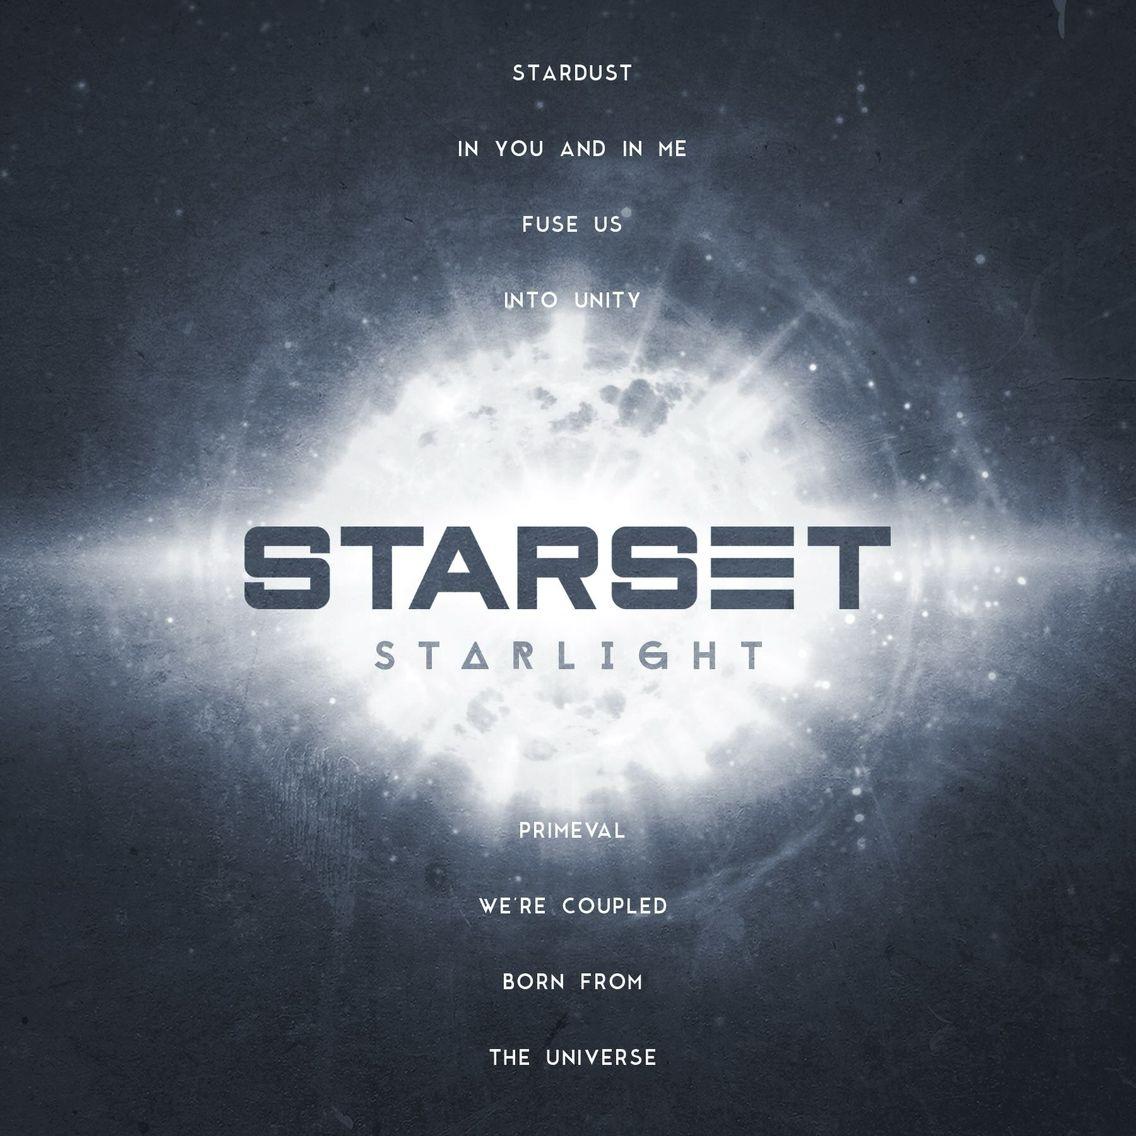 Stage Two of Starset's 'Vessels' album art reveal. Starset